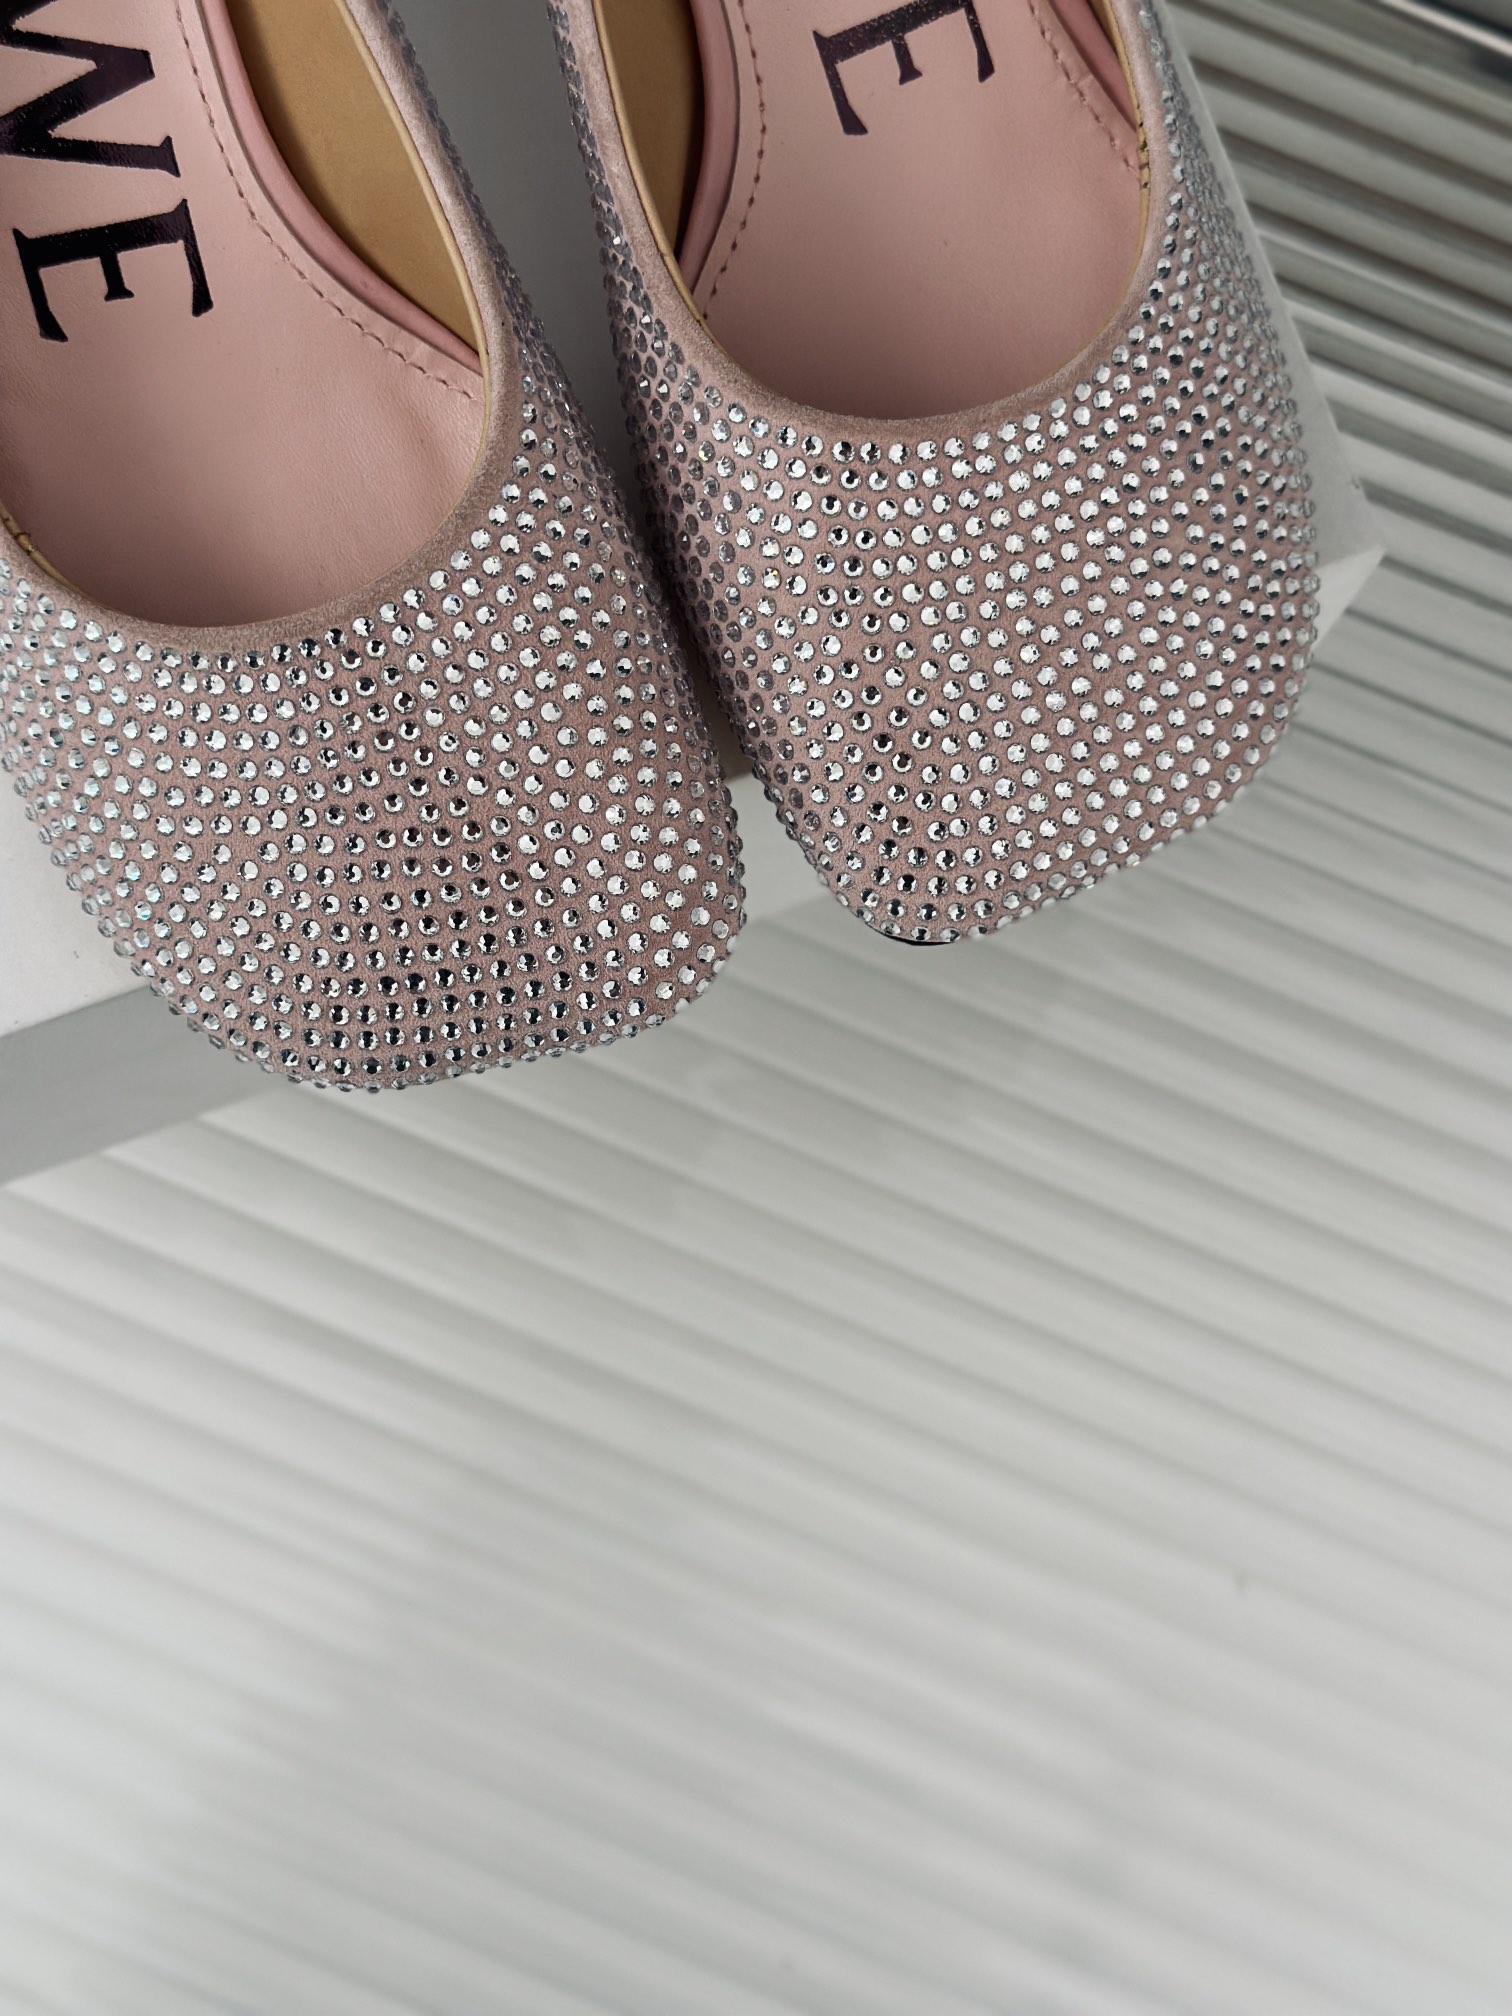 Loewe罗意威24S春夏新品杨幂同款水晶高跟鞋真是越看越上头那种!!!什么神仙鞋也太美了吧！完全仙女下